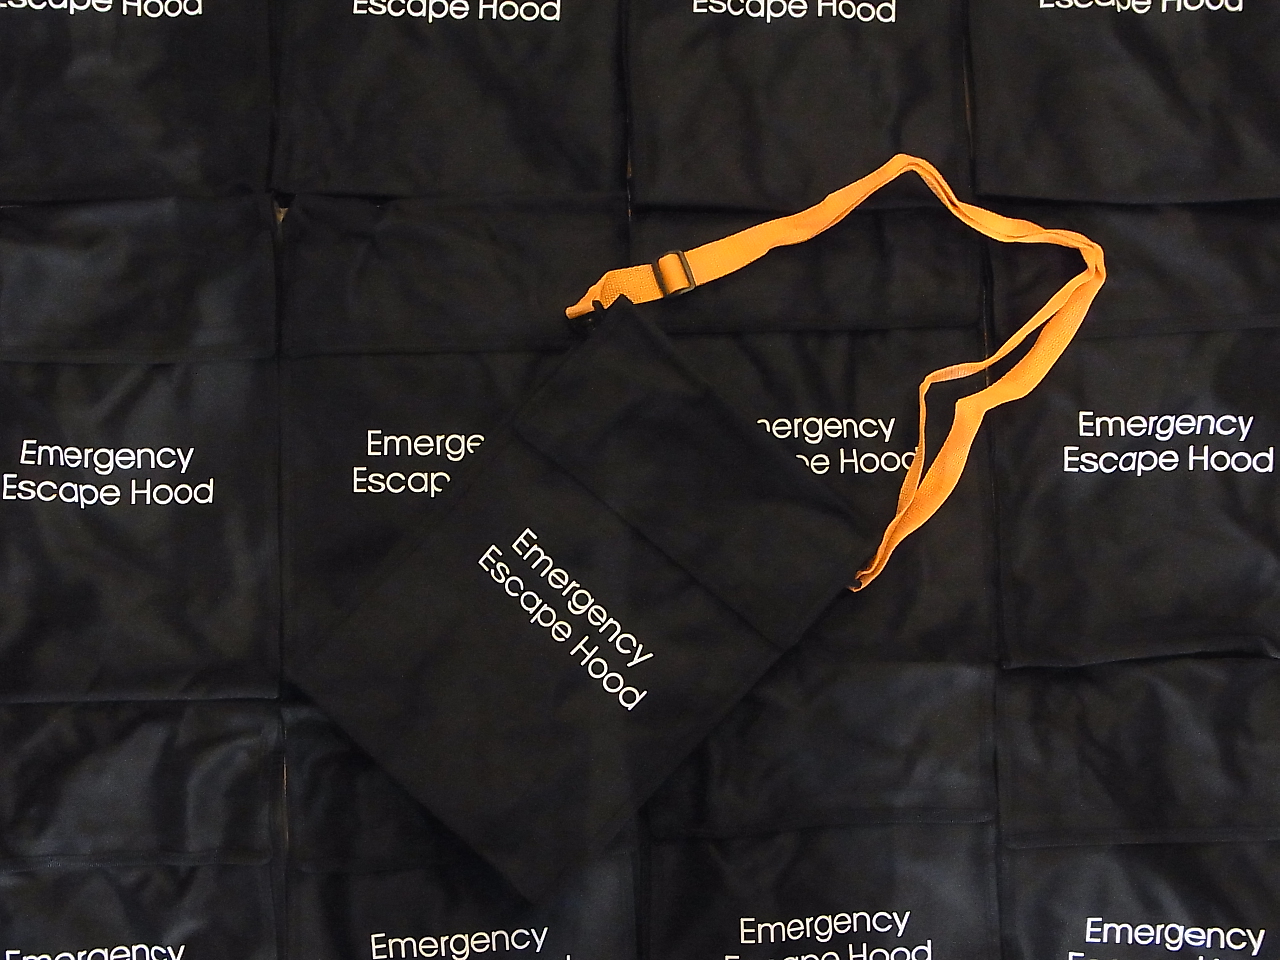 usmilitary-emergency-escape-hood-bag-20190405-1